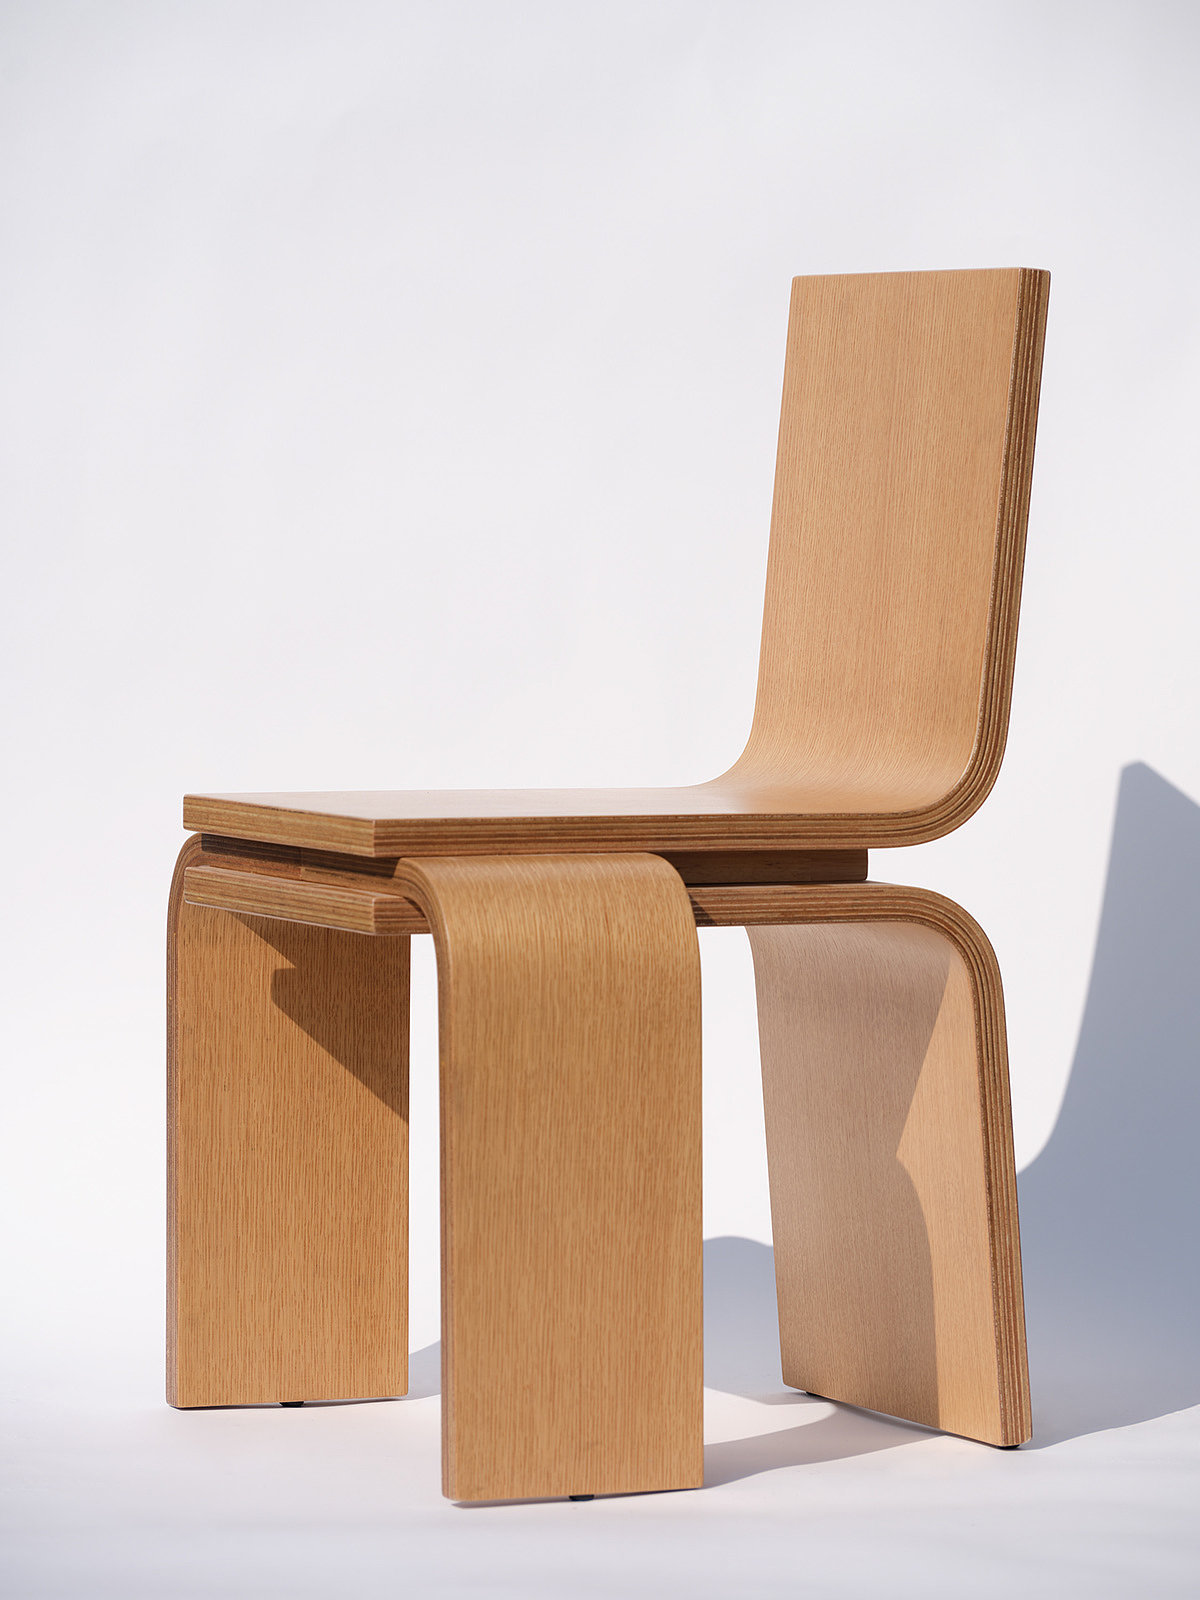 SJ PARK，椅子设计，产品设计，人体工程学，vel chair，可拼装设计，